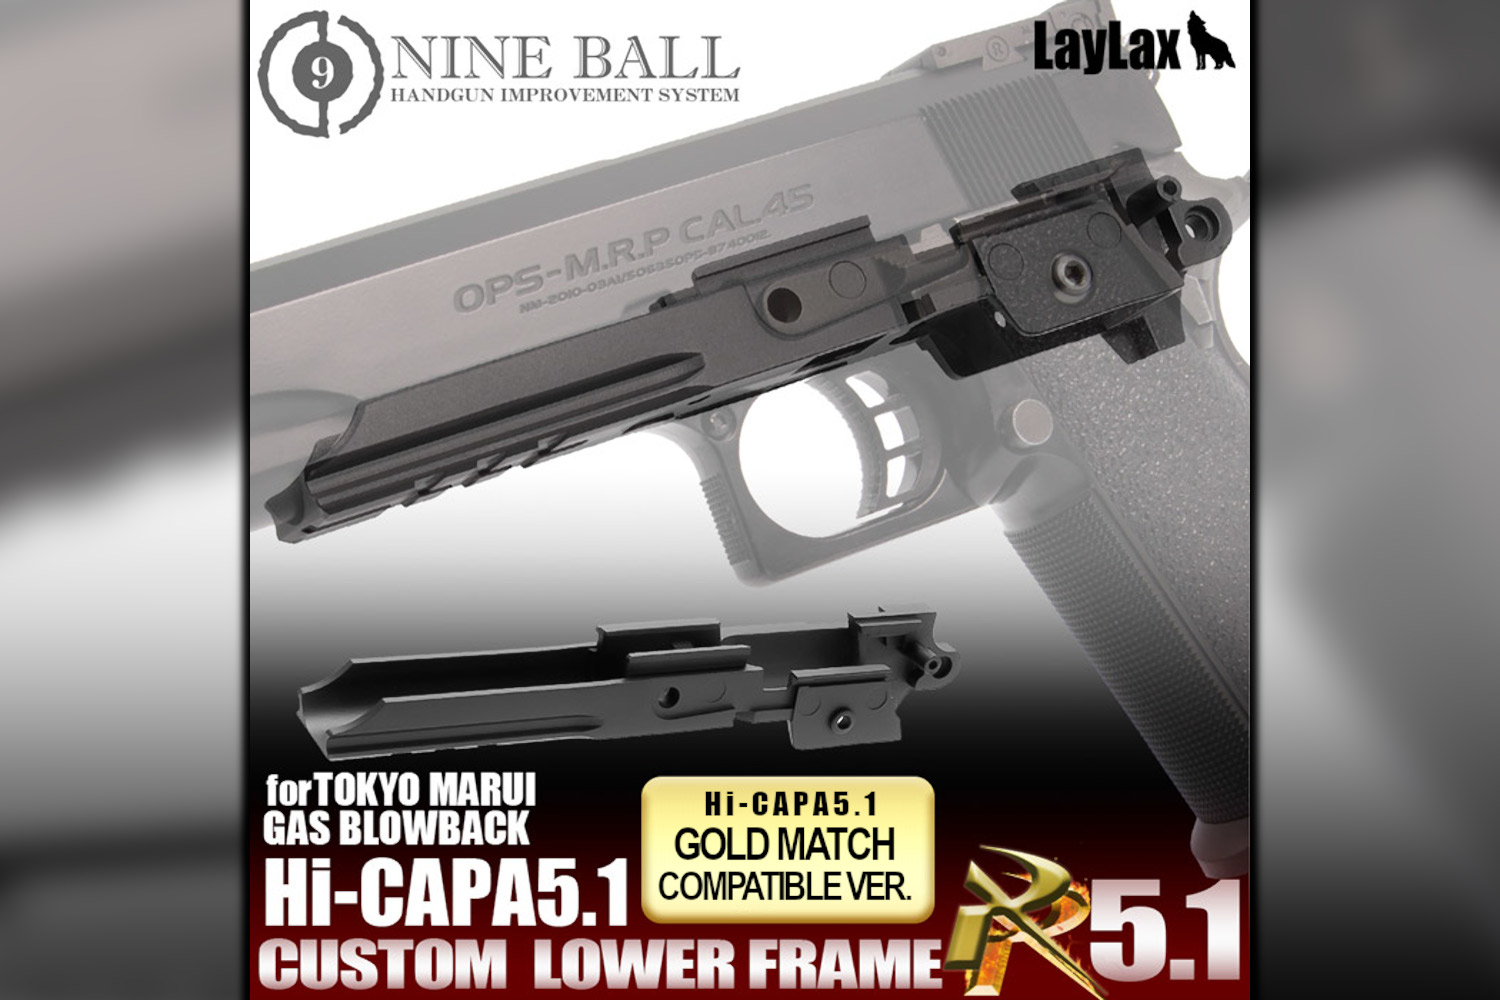 LayLax NINE BALL Hi-CAPA Custom Lower Frame 